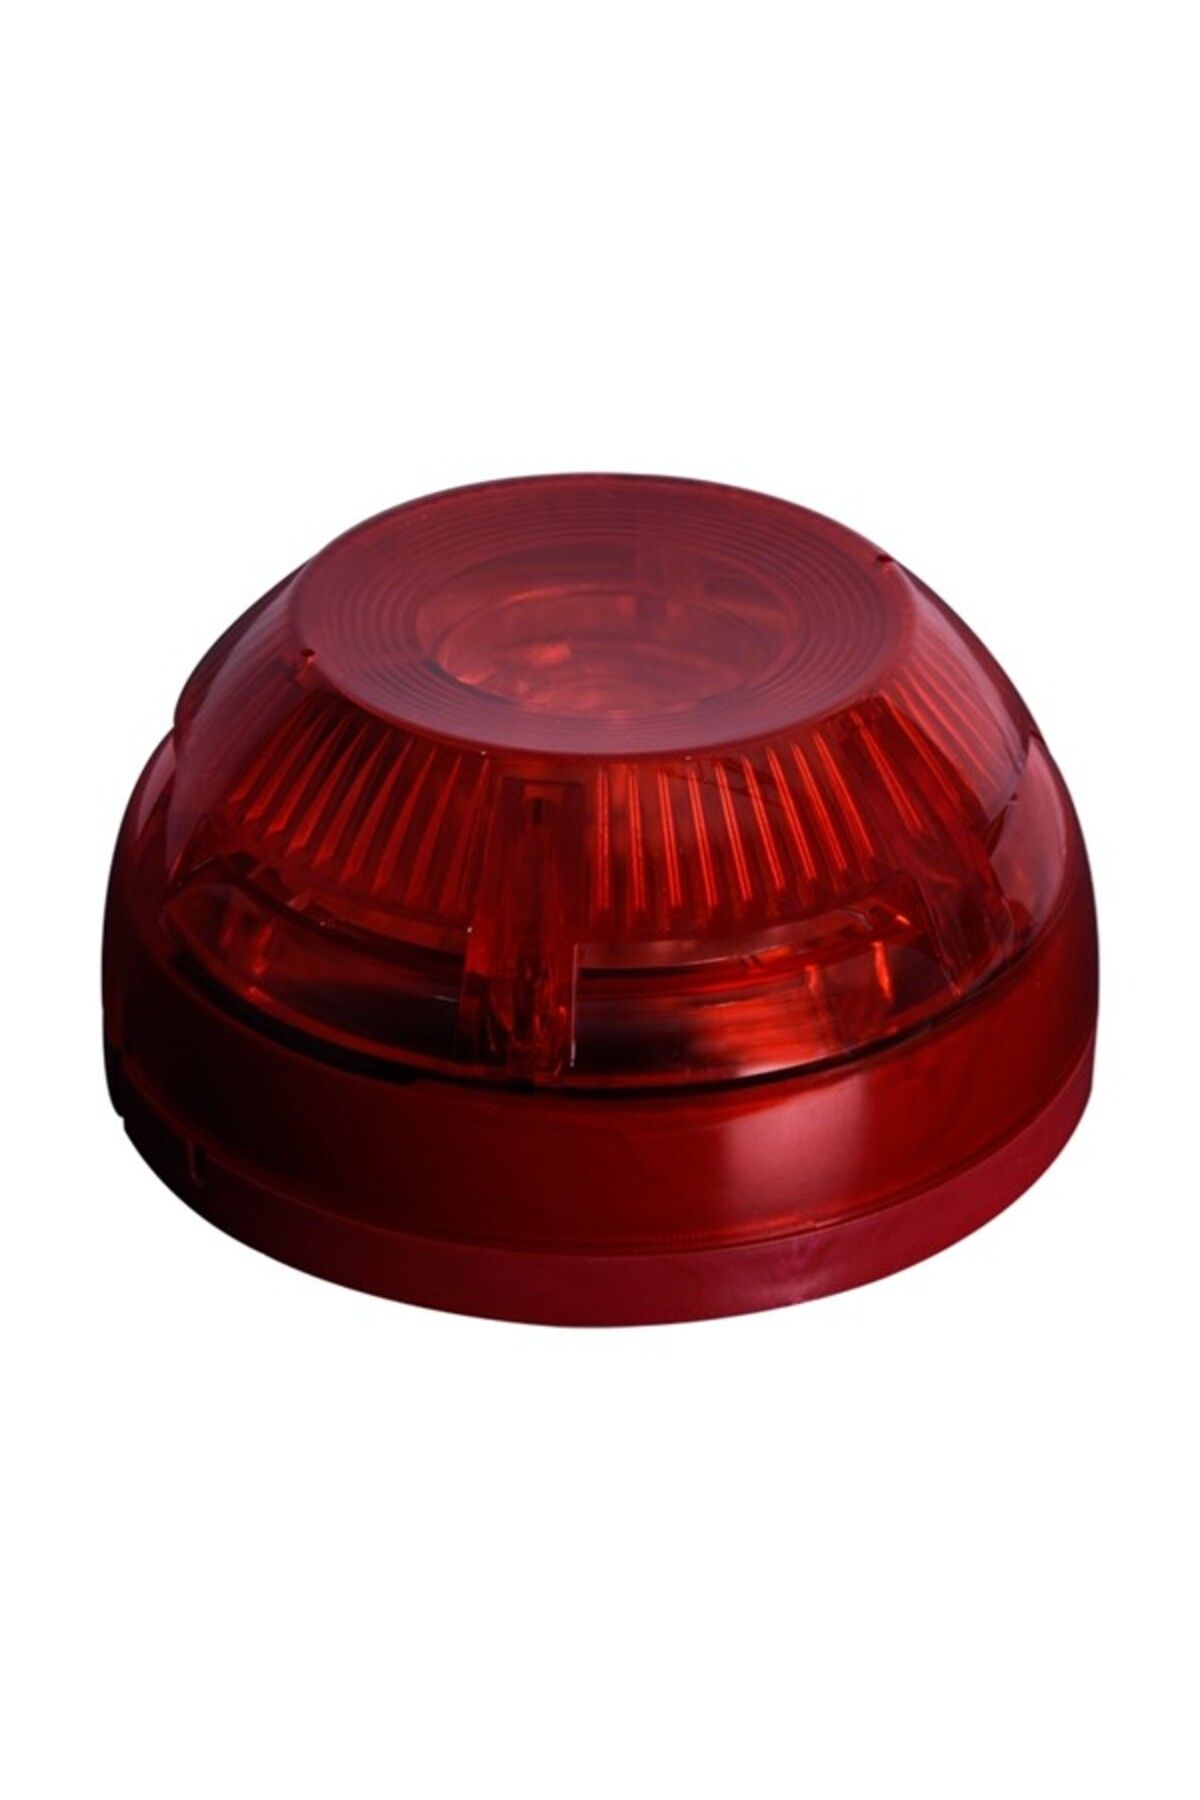 Genel Markalar Tfs-3192r Konvansiyonel Flaşörlü Kırmızı Pencereli Yangın Alarm Sireni